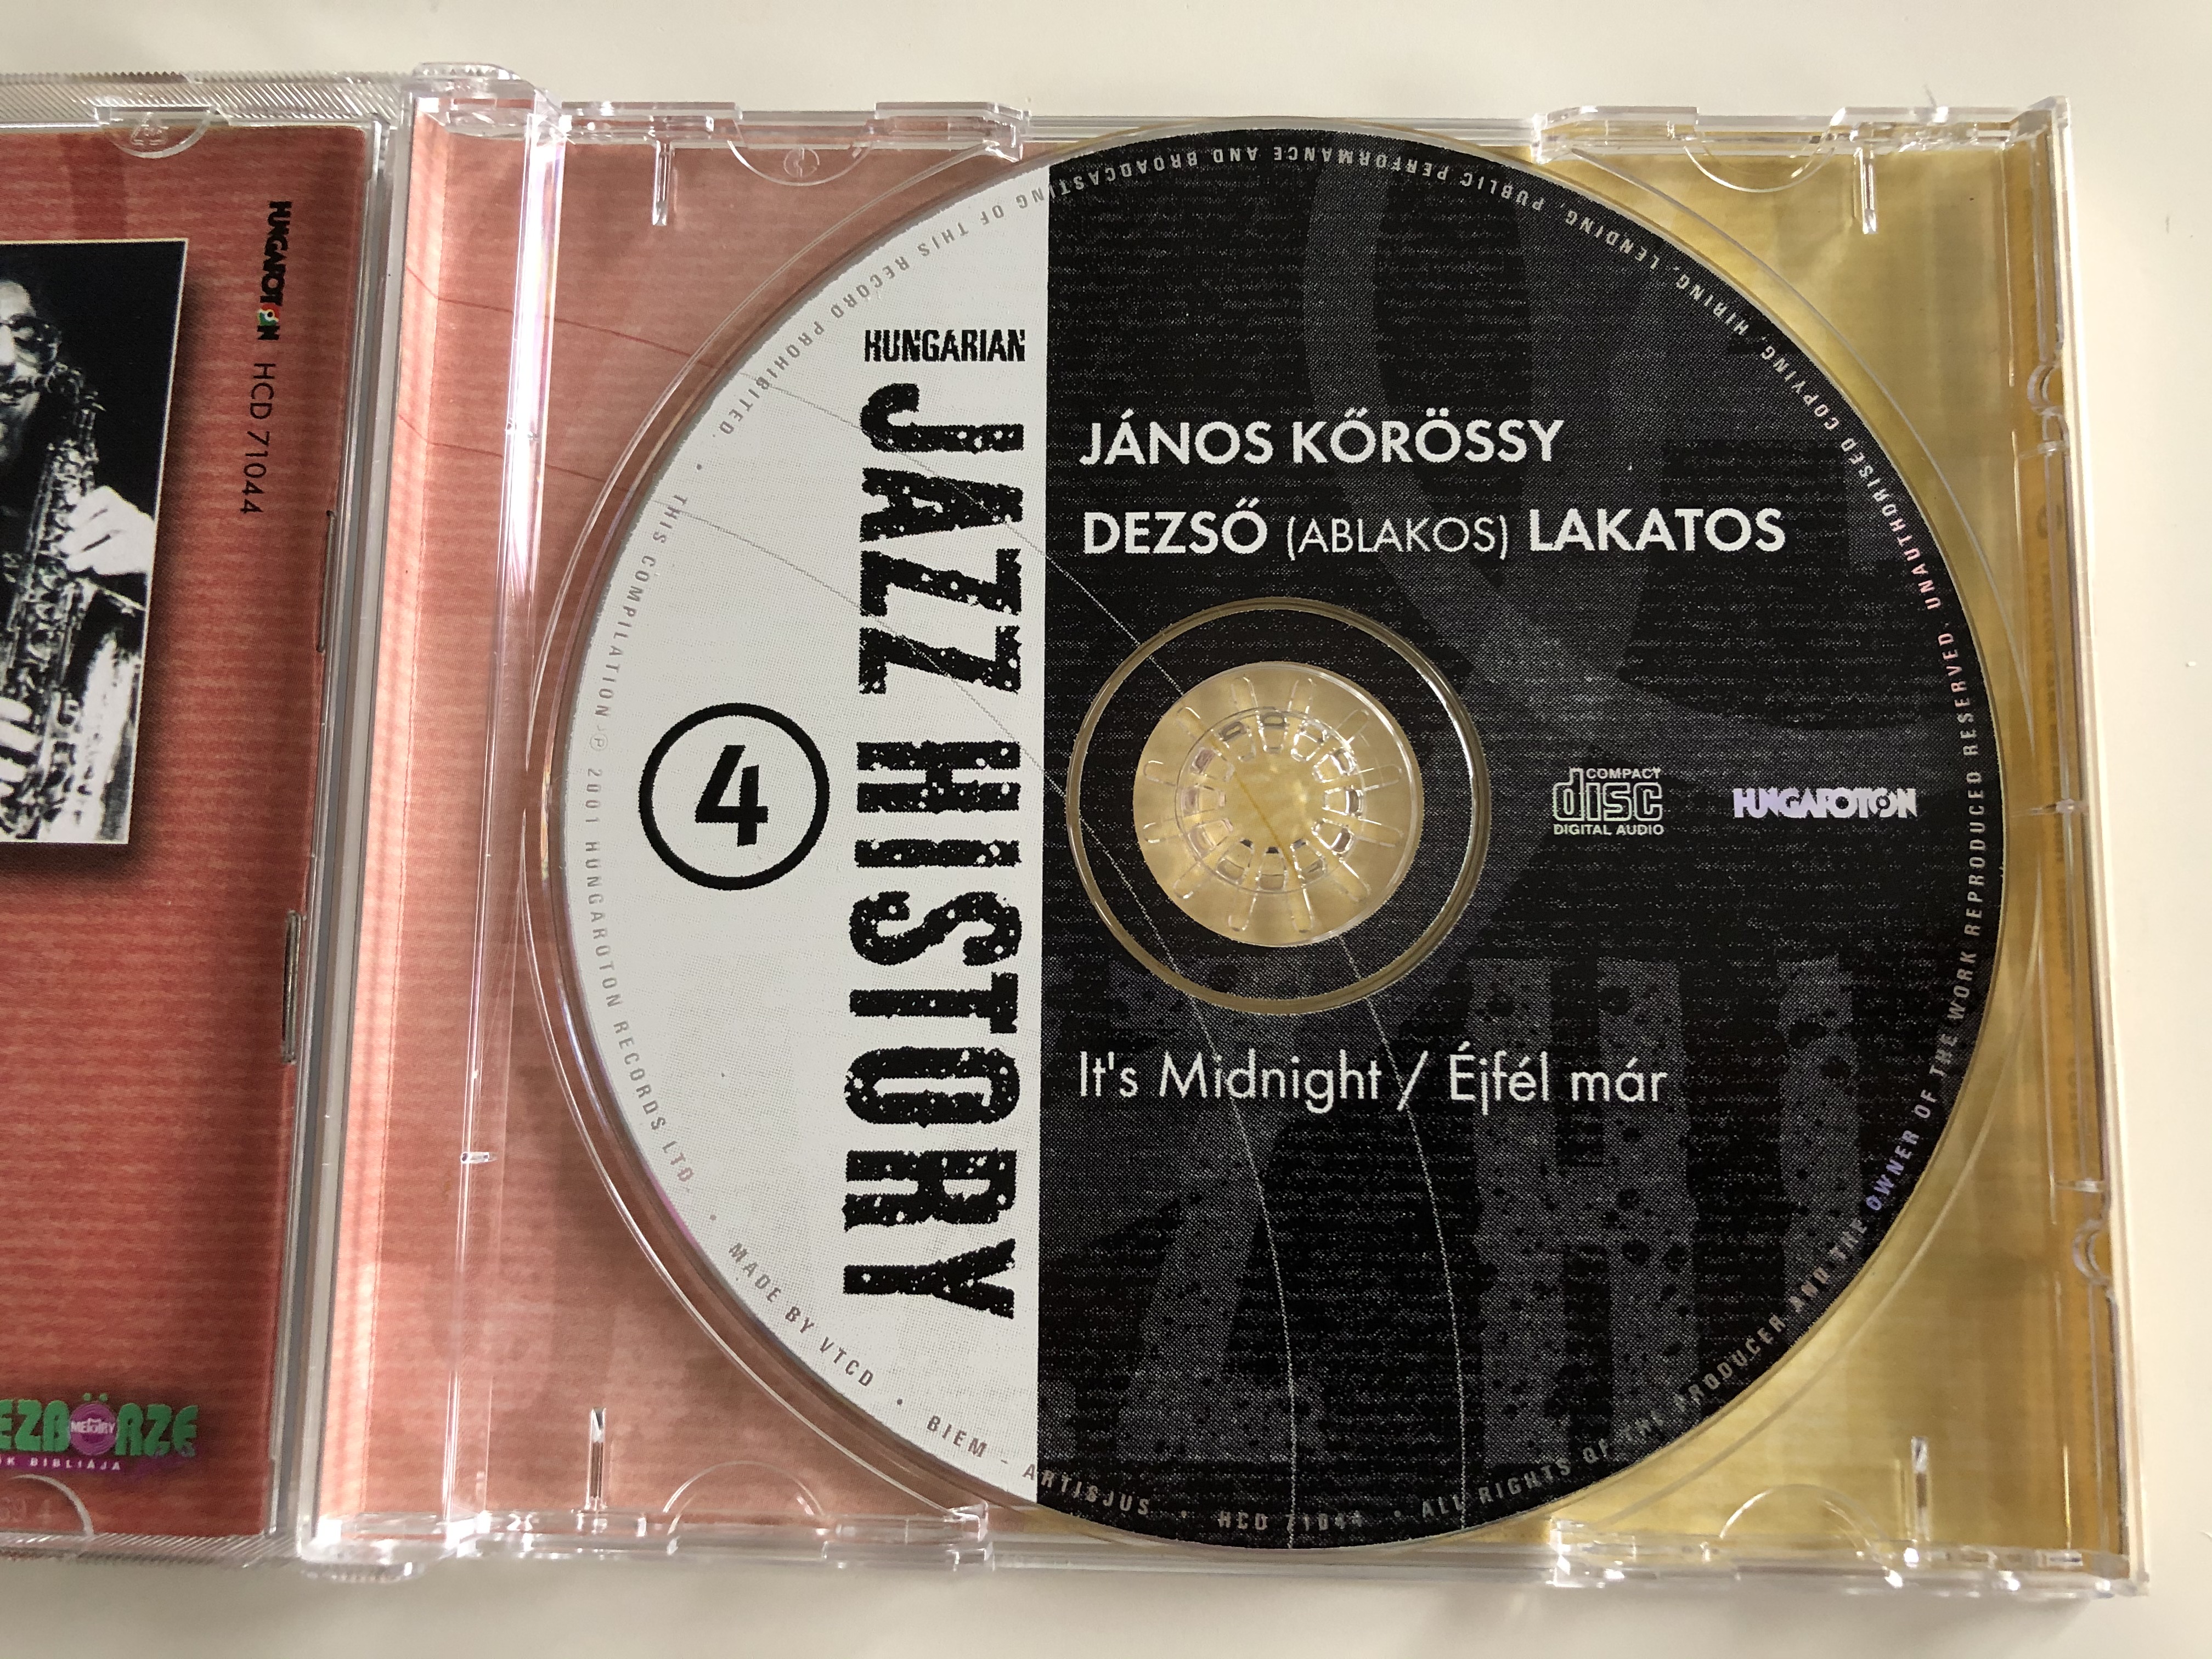 j-nos-k-r-ssy-dezs-ablakos-lakatos-it-s-midnight-jf-l-m-r-hungarian-jazz-history-4-hungaroton-audio-cd-2001-hcd-71044-7-.jpg